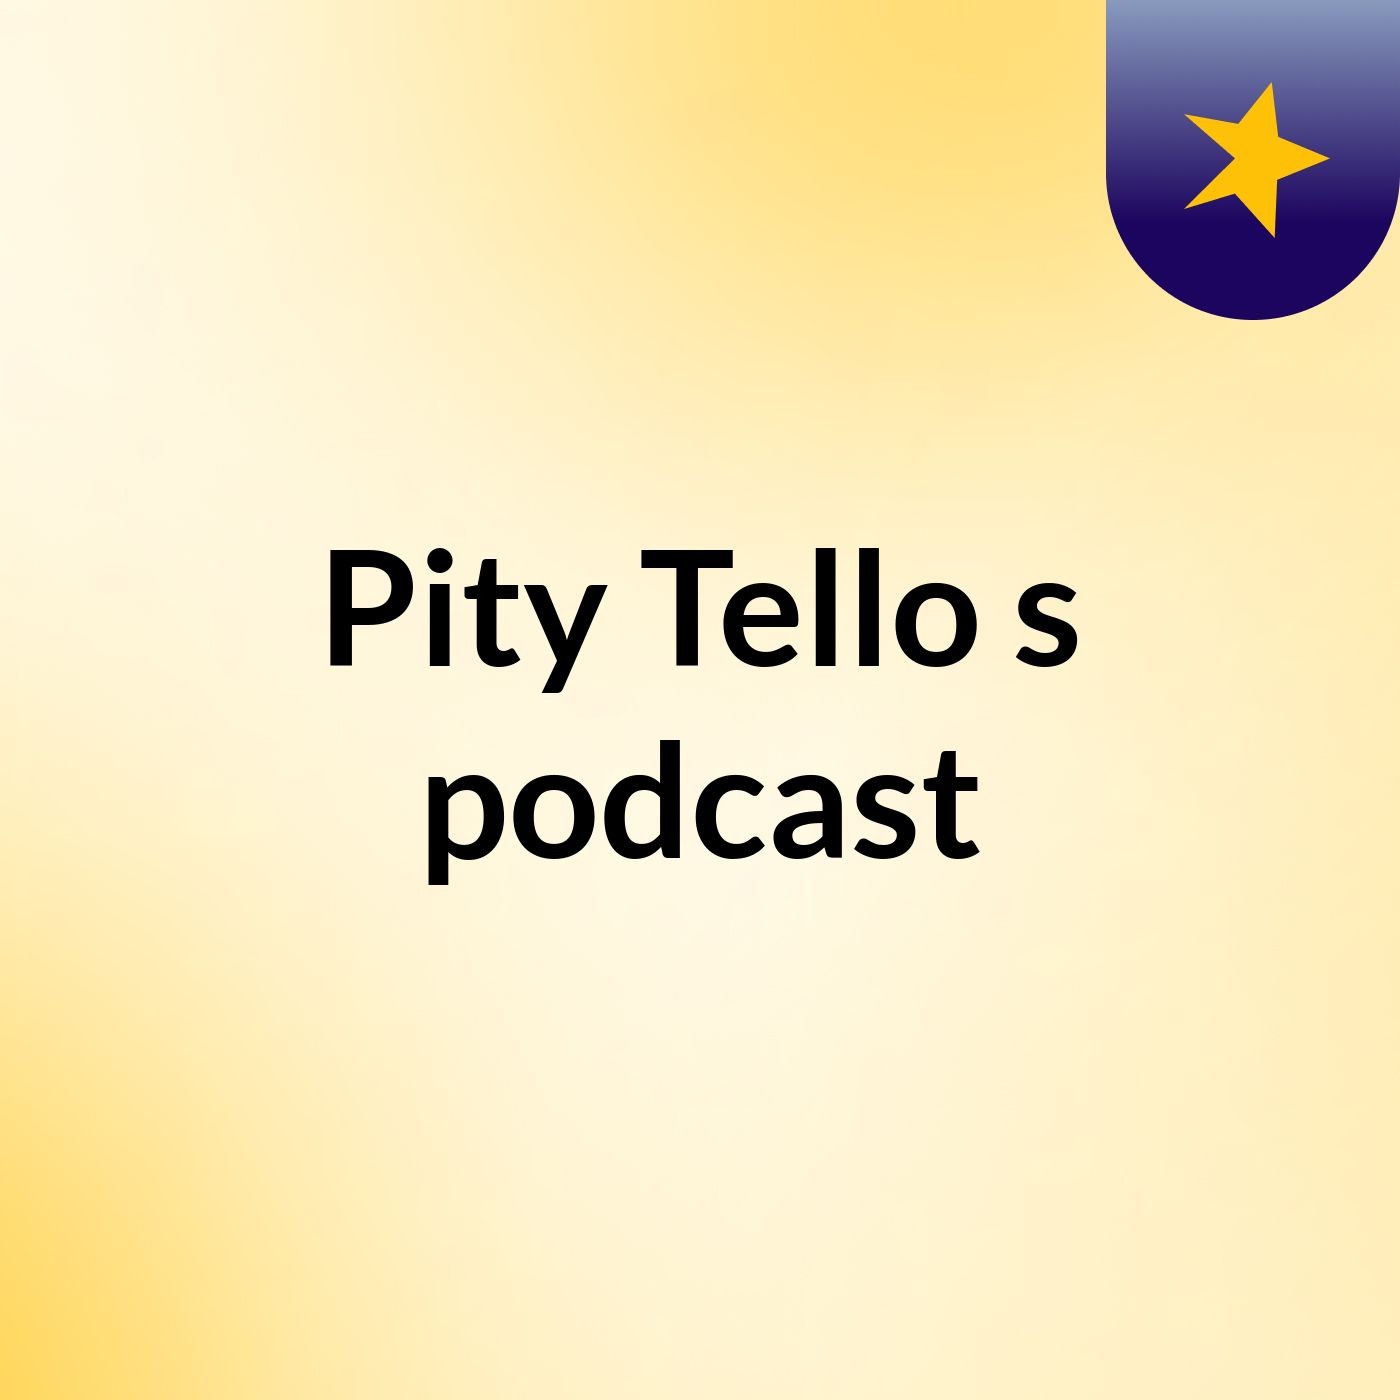 Pity Tello's podcast